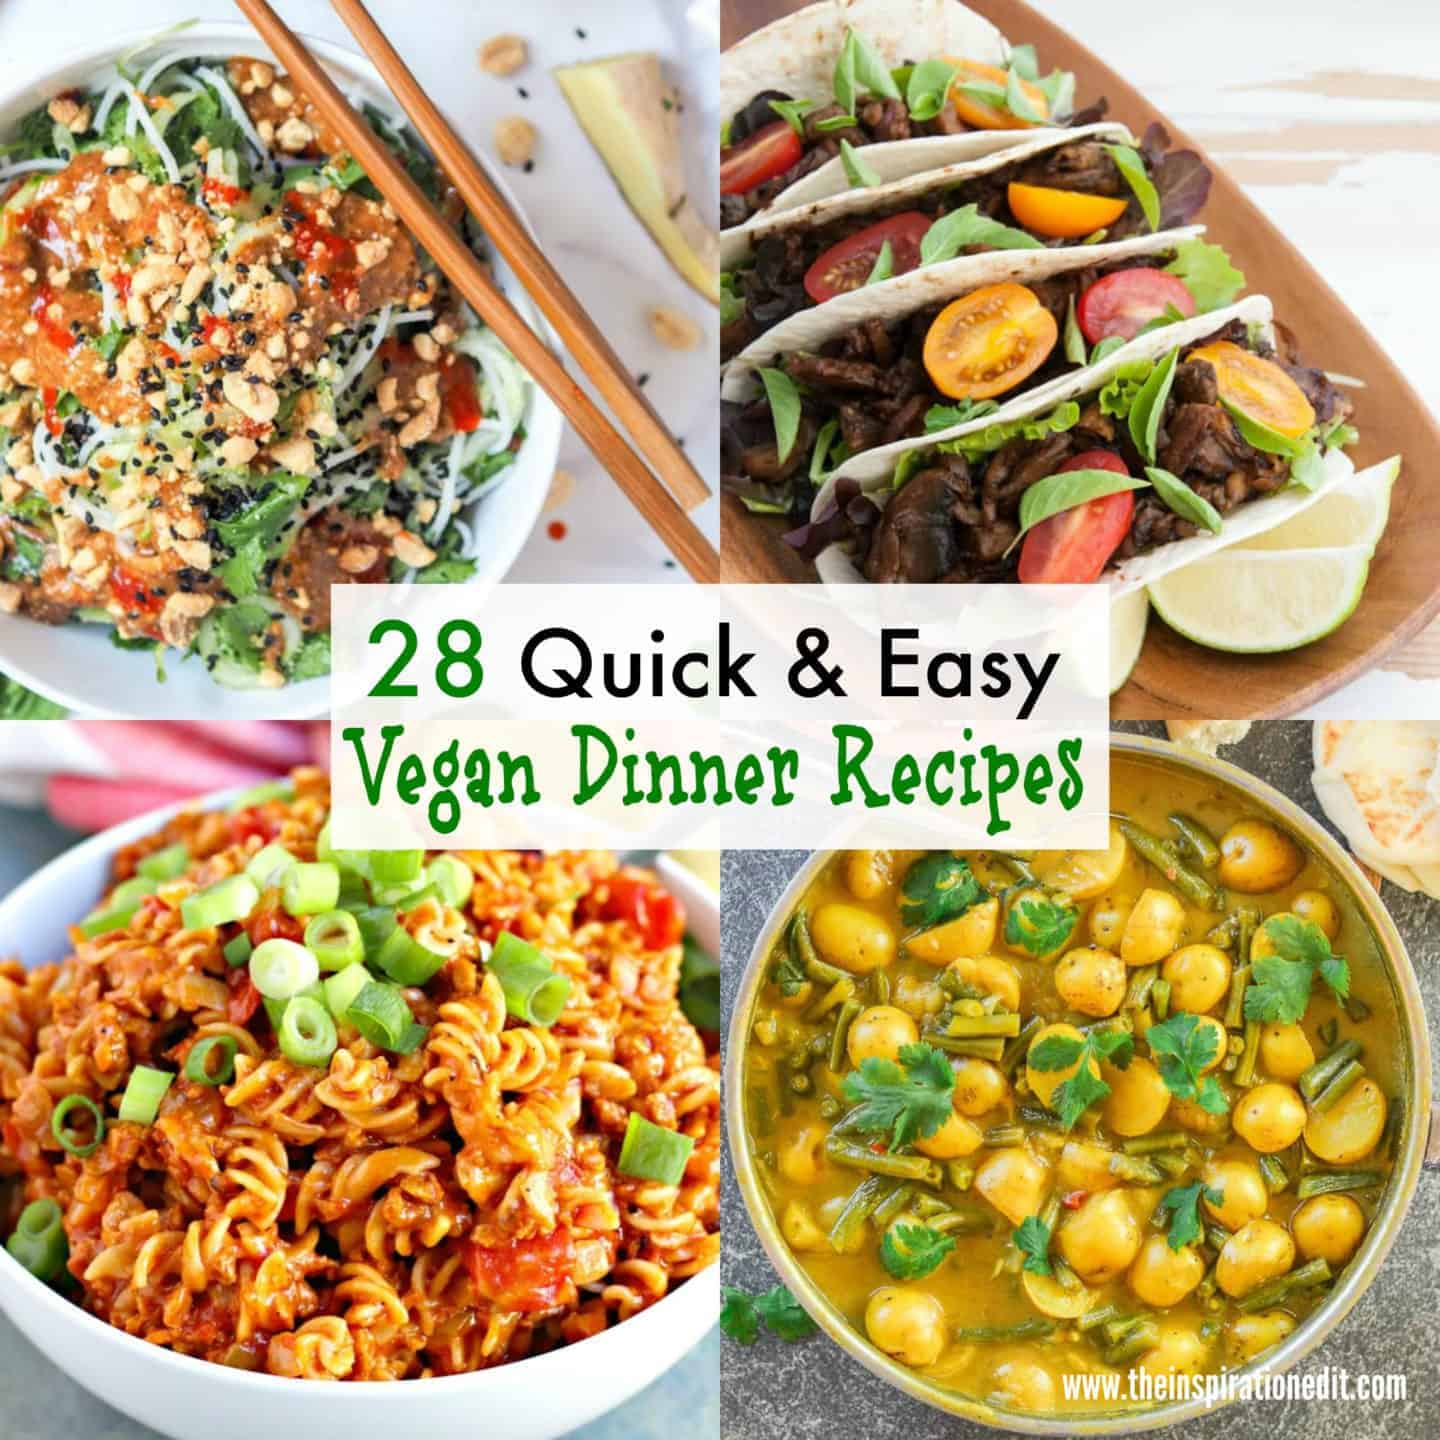 28 Quick & Easy Vegan Dinner Recipes · The Inspiration Edit